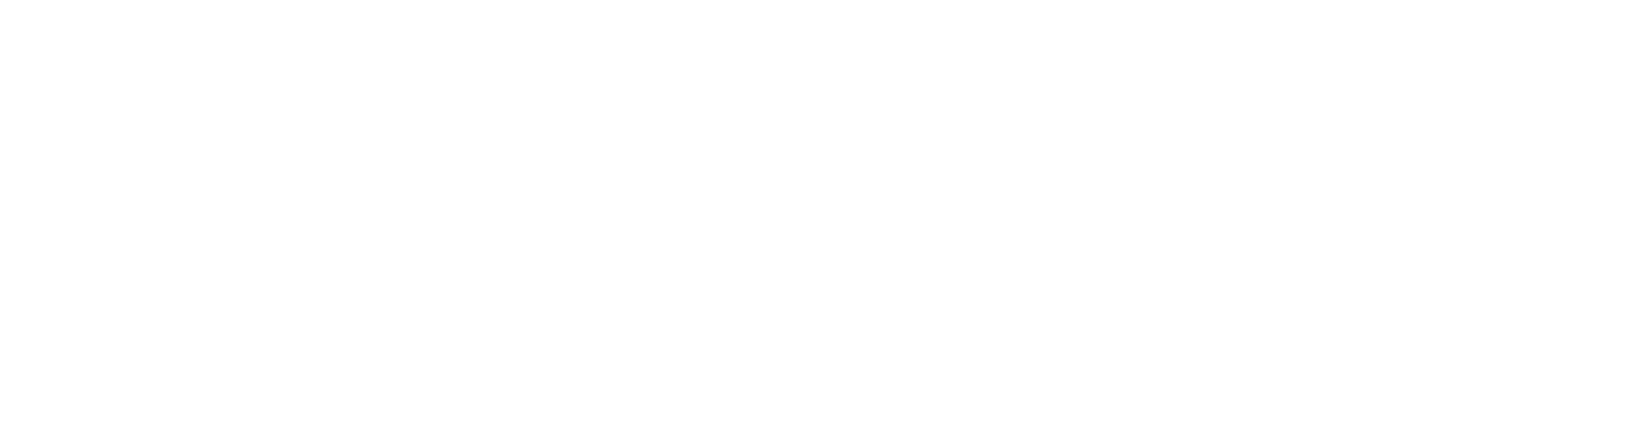 Bloober Team logo grand pour les fonds sombres (PNG transparent)